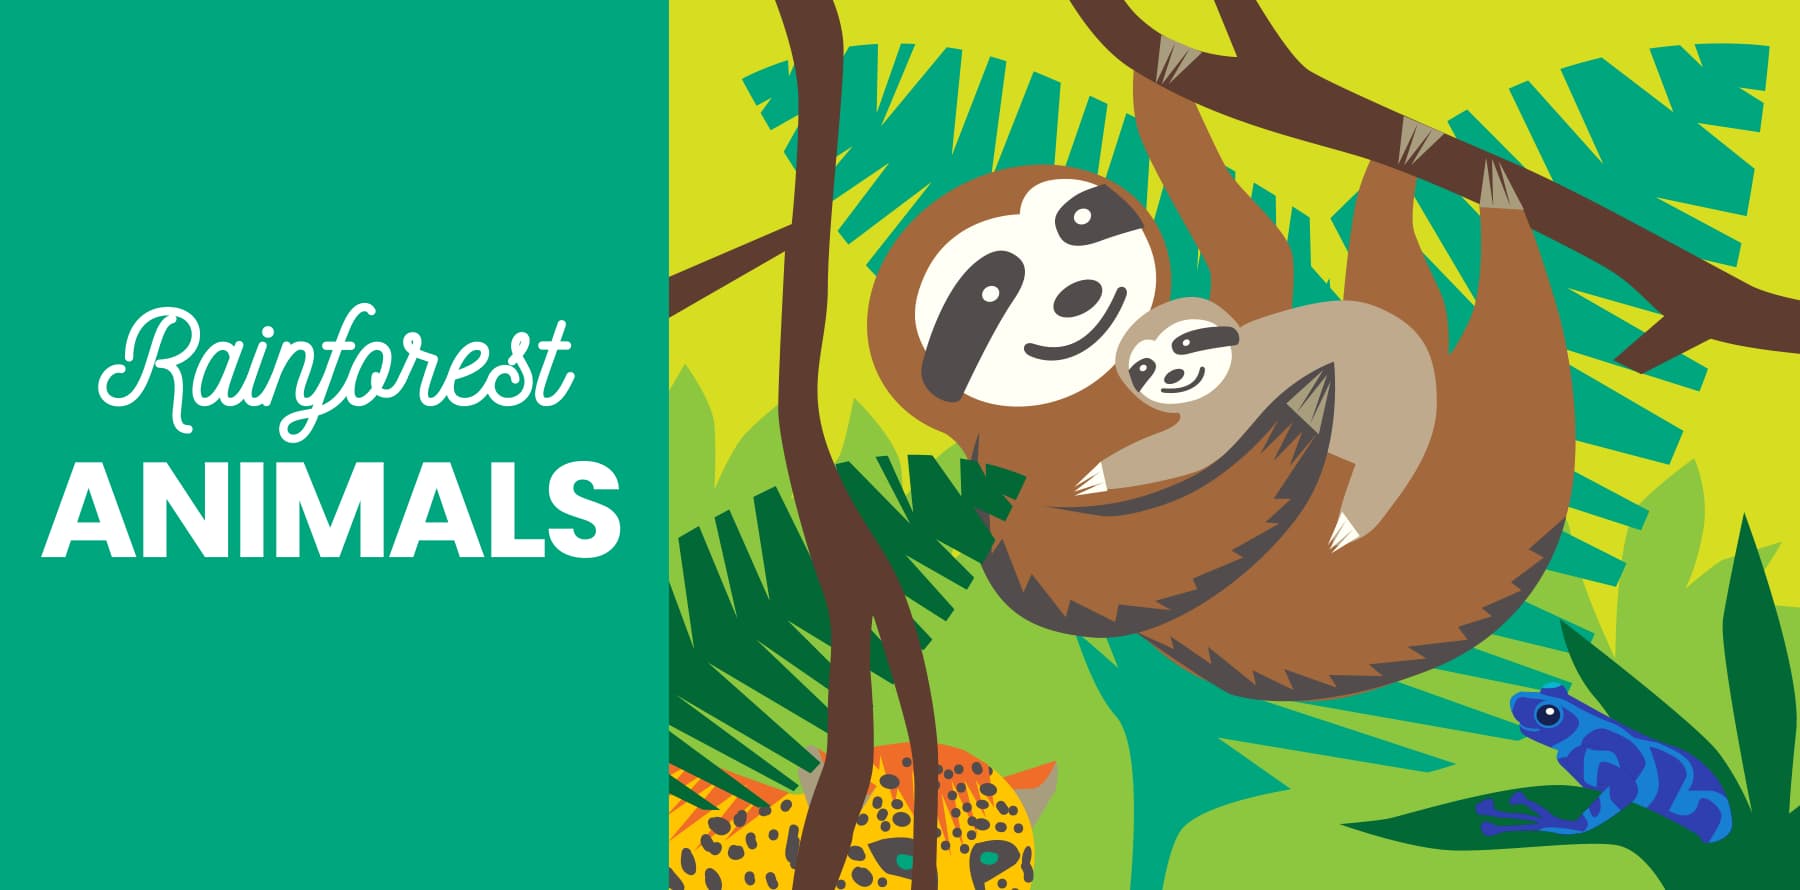 40 Rainforest Animals - Birds, Mammals, and More from Little Passports